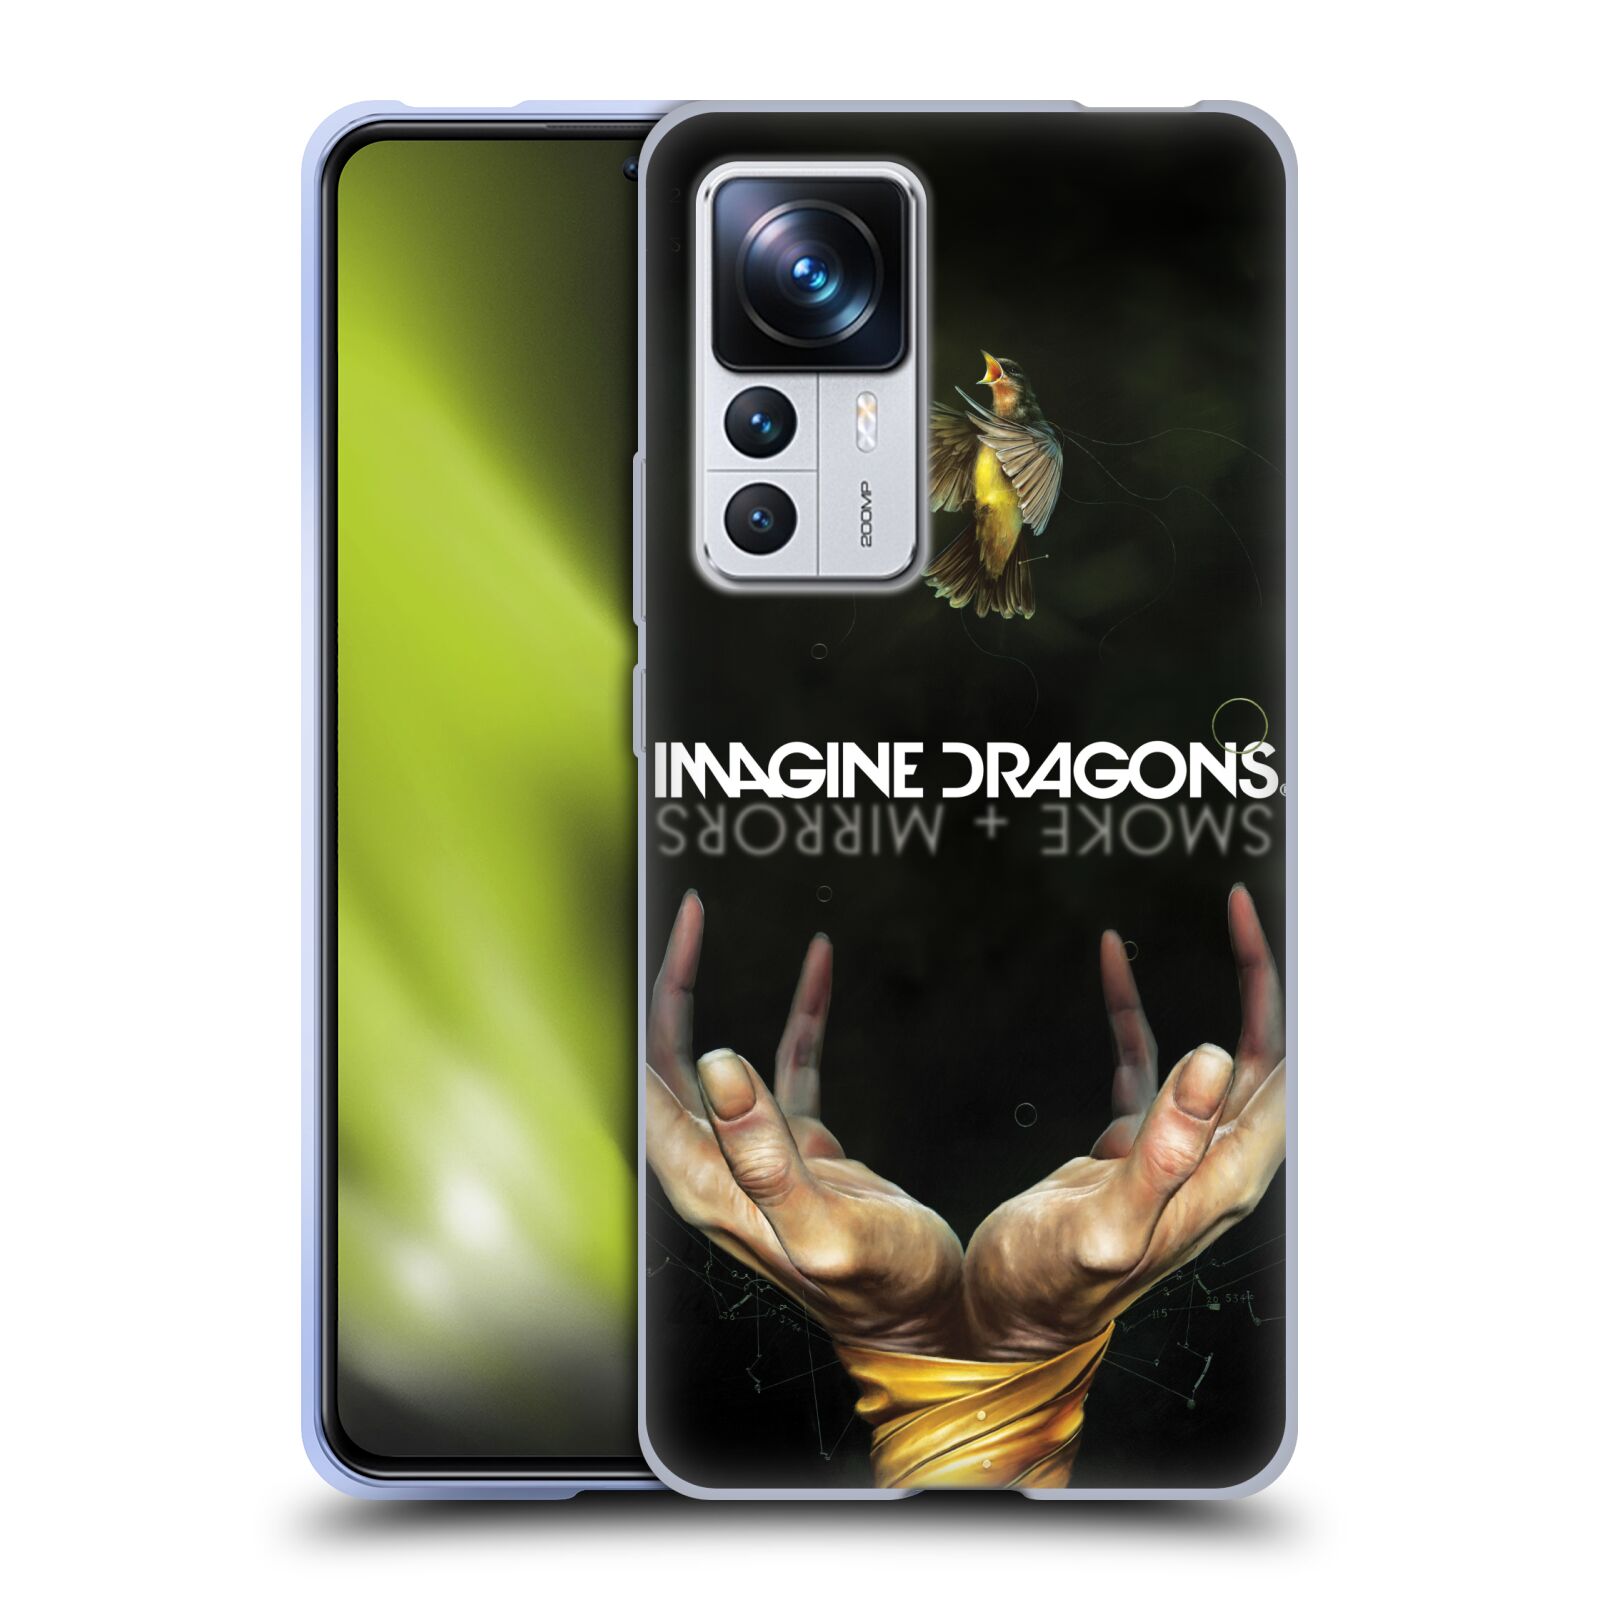 Silikonové pouzdro na mobil Xiaomi 12T / 12T Pro - Imagine Dragons - Smoke And Mirrors (Silikonový kryt, obal, pouzdro na mobilní telefon Xiaomi 12T / 12T Pro s licencovaným motivem Imagine Dragons - Smoke And Mirrors)